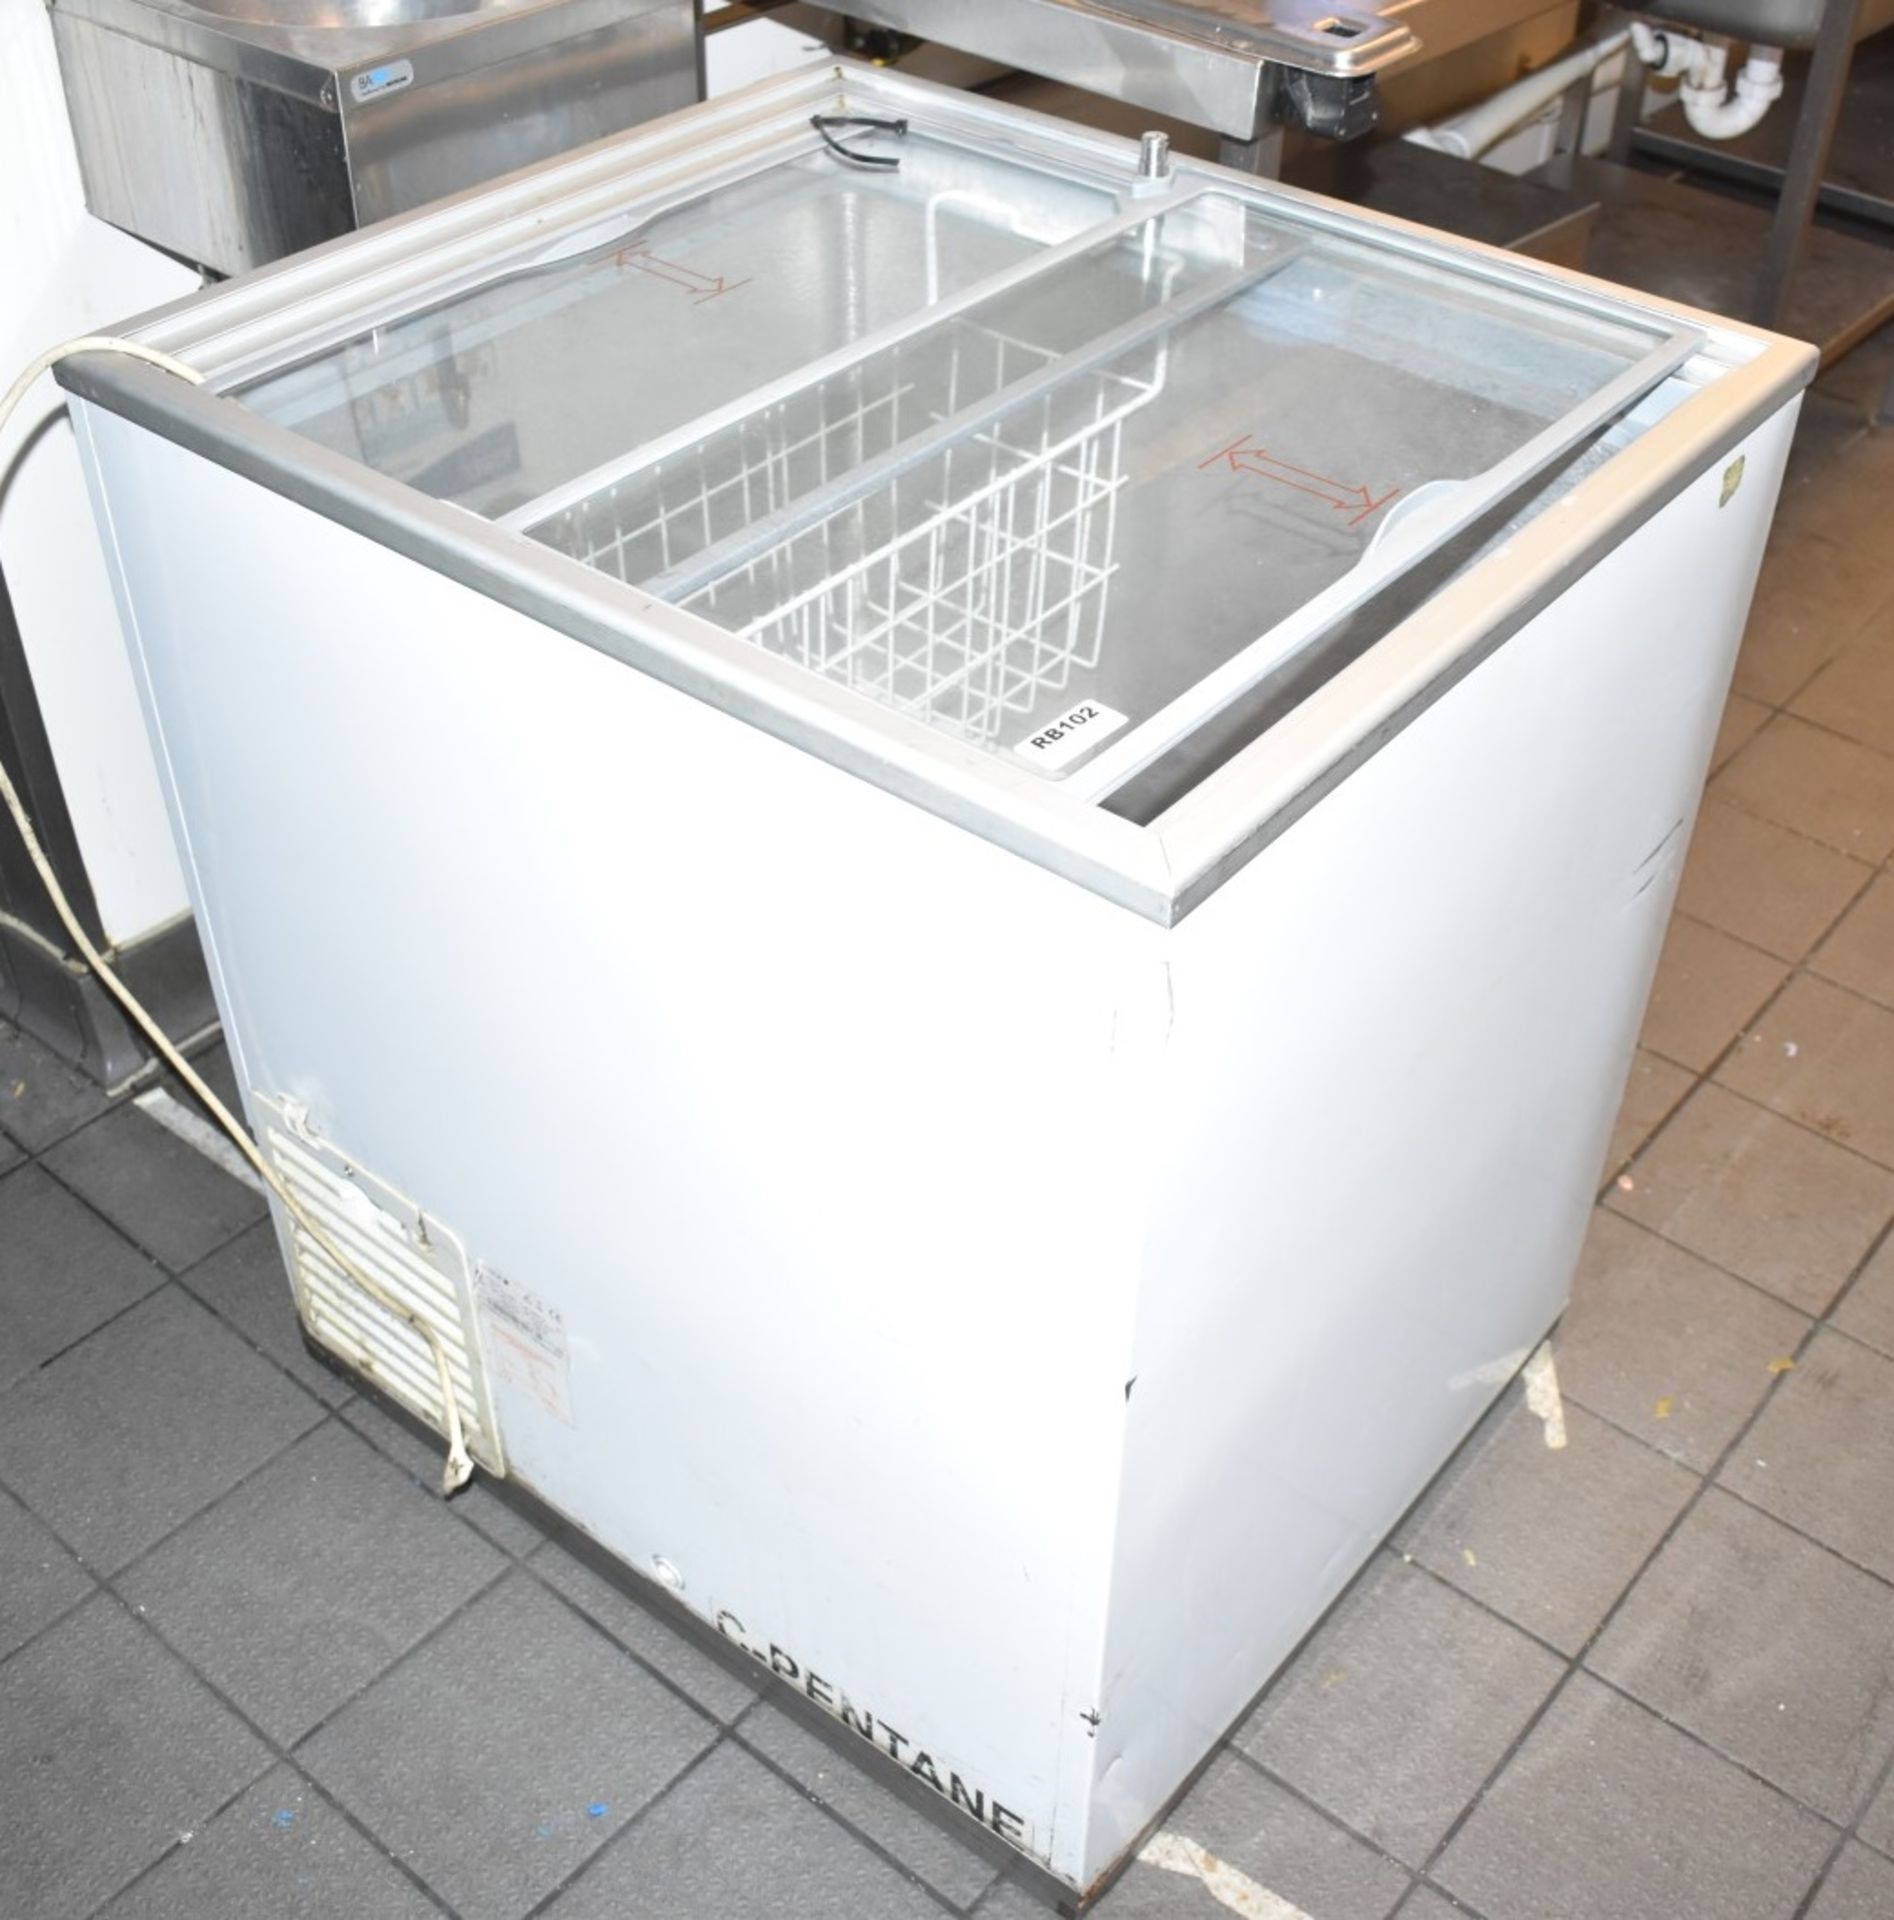 1 x Chest Freezer - Size H80 x W73 x D63 cms - Ref: RB102 - CL558 - Location: Altrincham WA14This